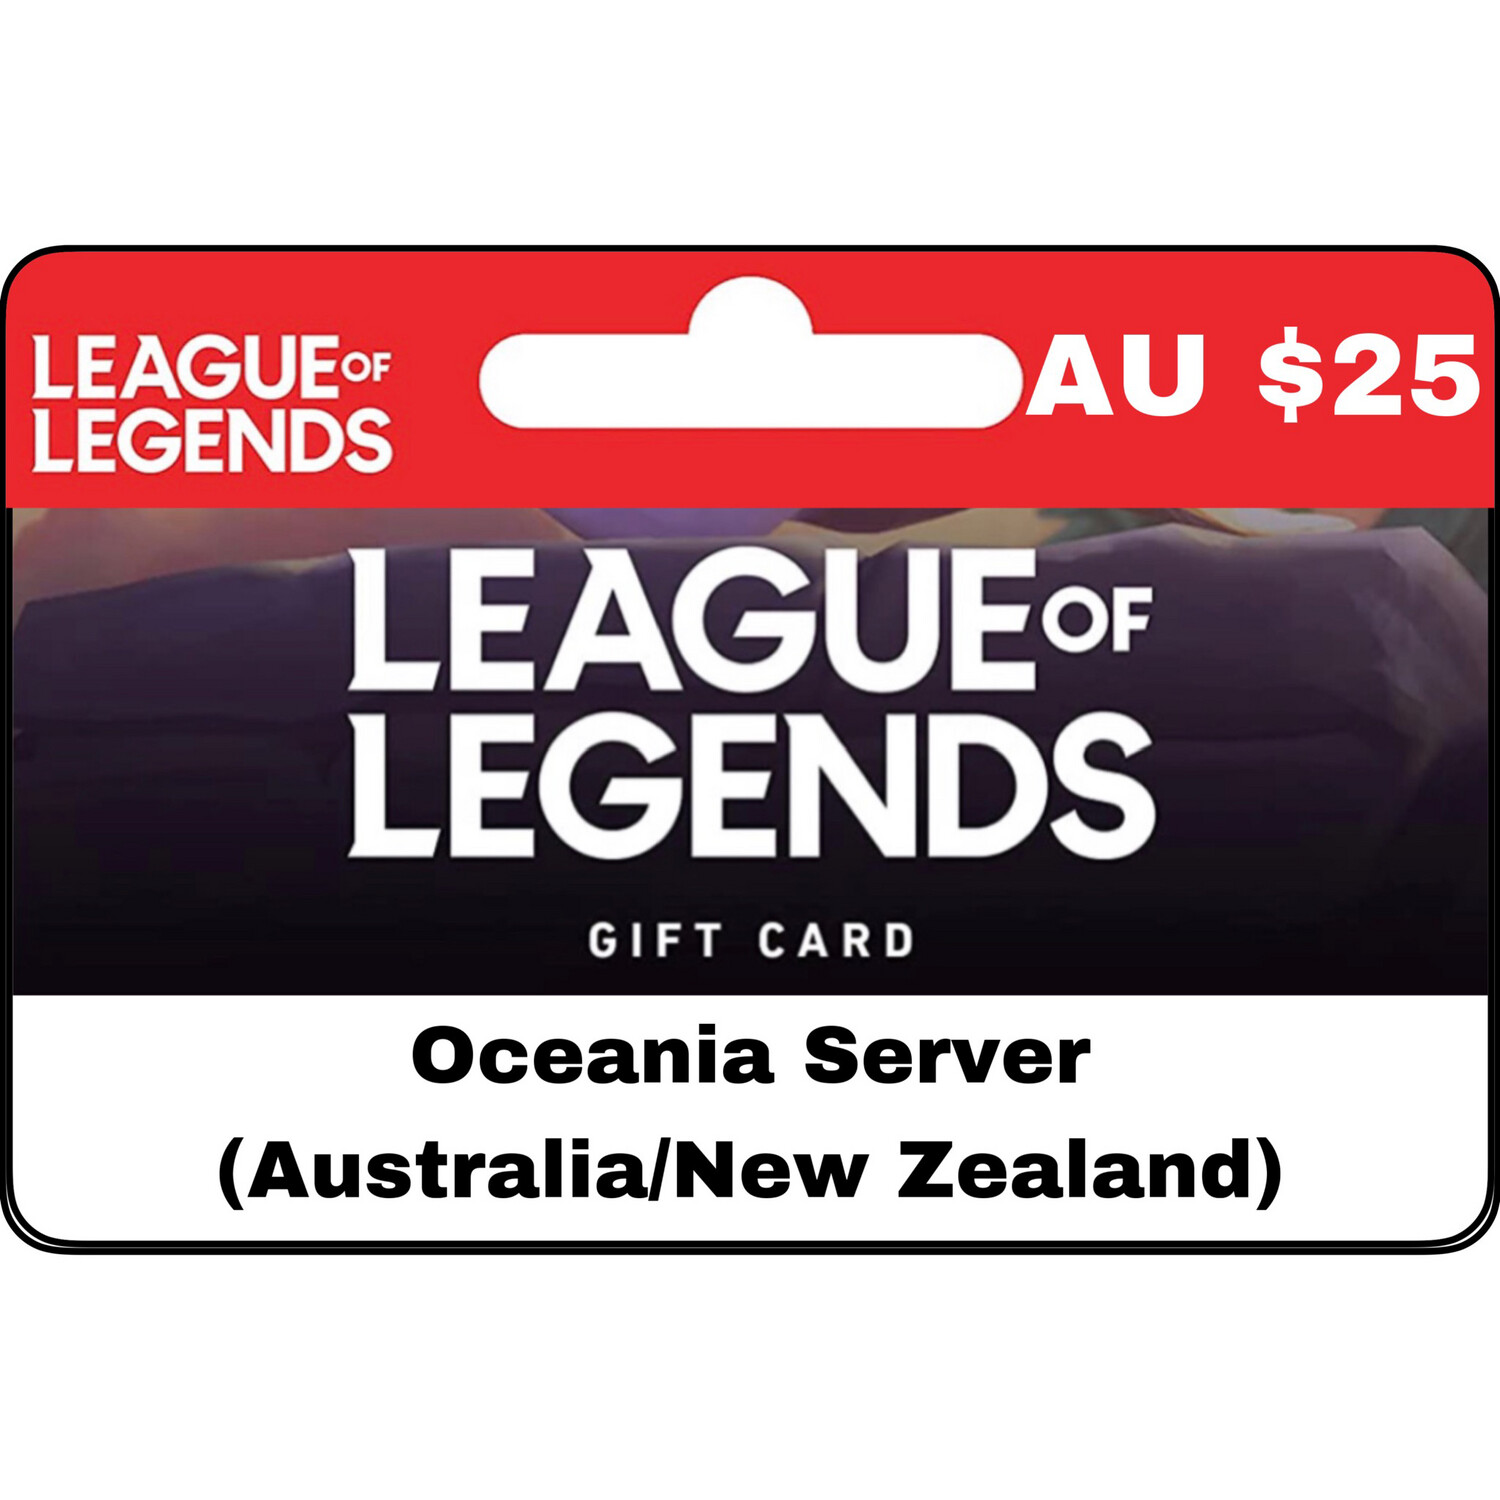 League of Legends AUD $25 Oceania Server Gift Card